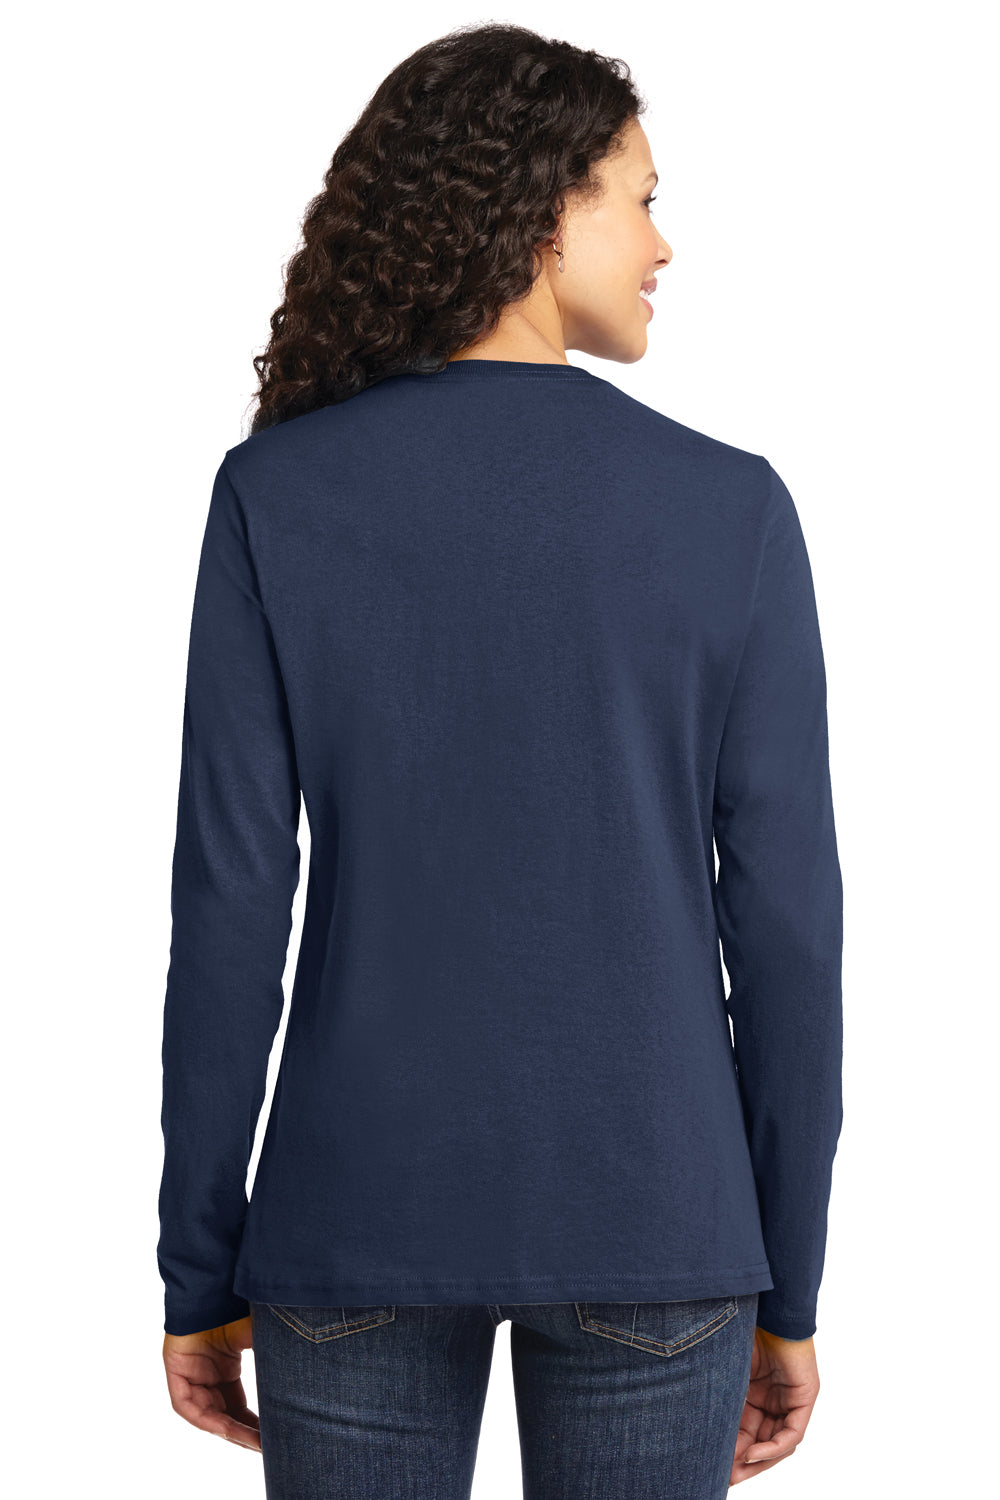 Port & Company LPC54LS Womens Core Long Sleeve Crewneck T-Shirt Navy Blue Back